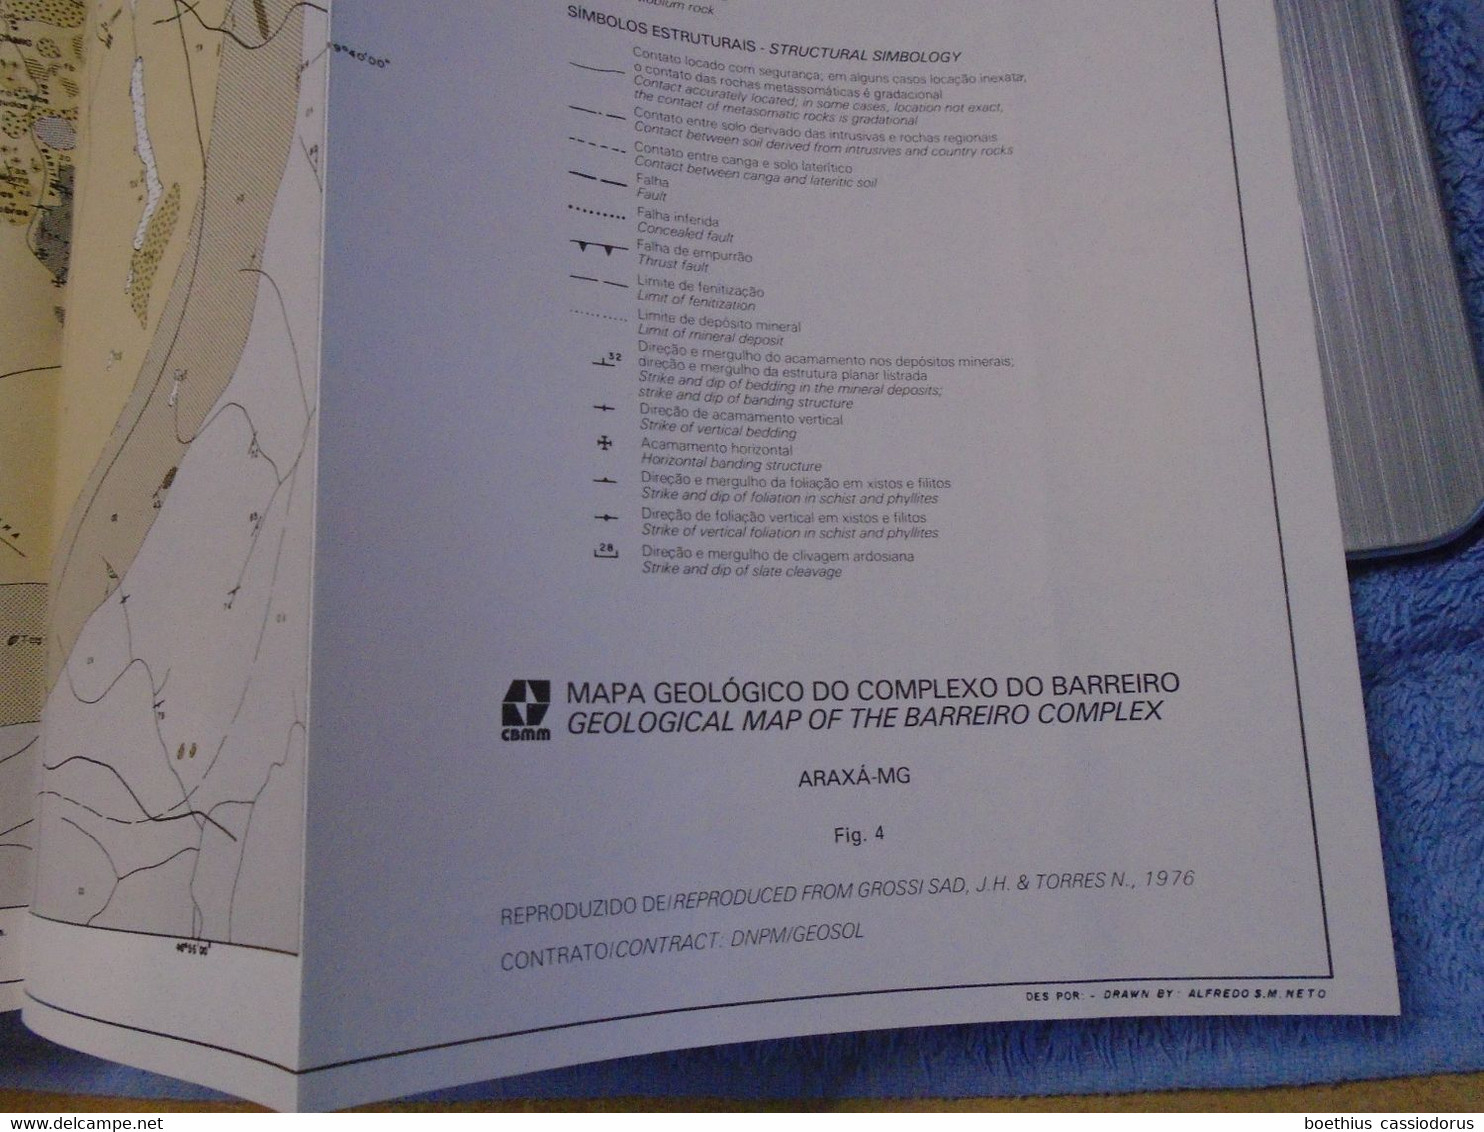 CARBONITIC COMPLEXES OF BRAZIL : GEOLOGY 1984 COMPANHIA BRASILEIRA DE METALURGIA E MINERACAO / BRESIL, GEOLOGIE...